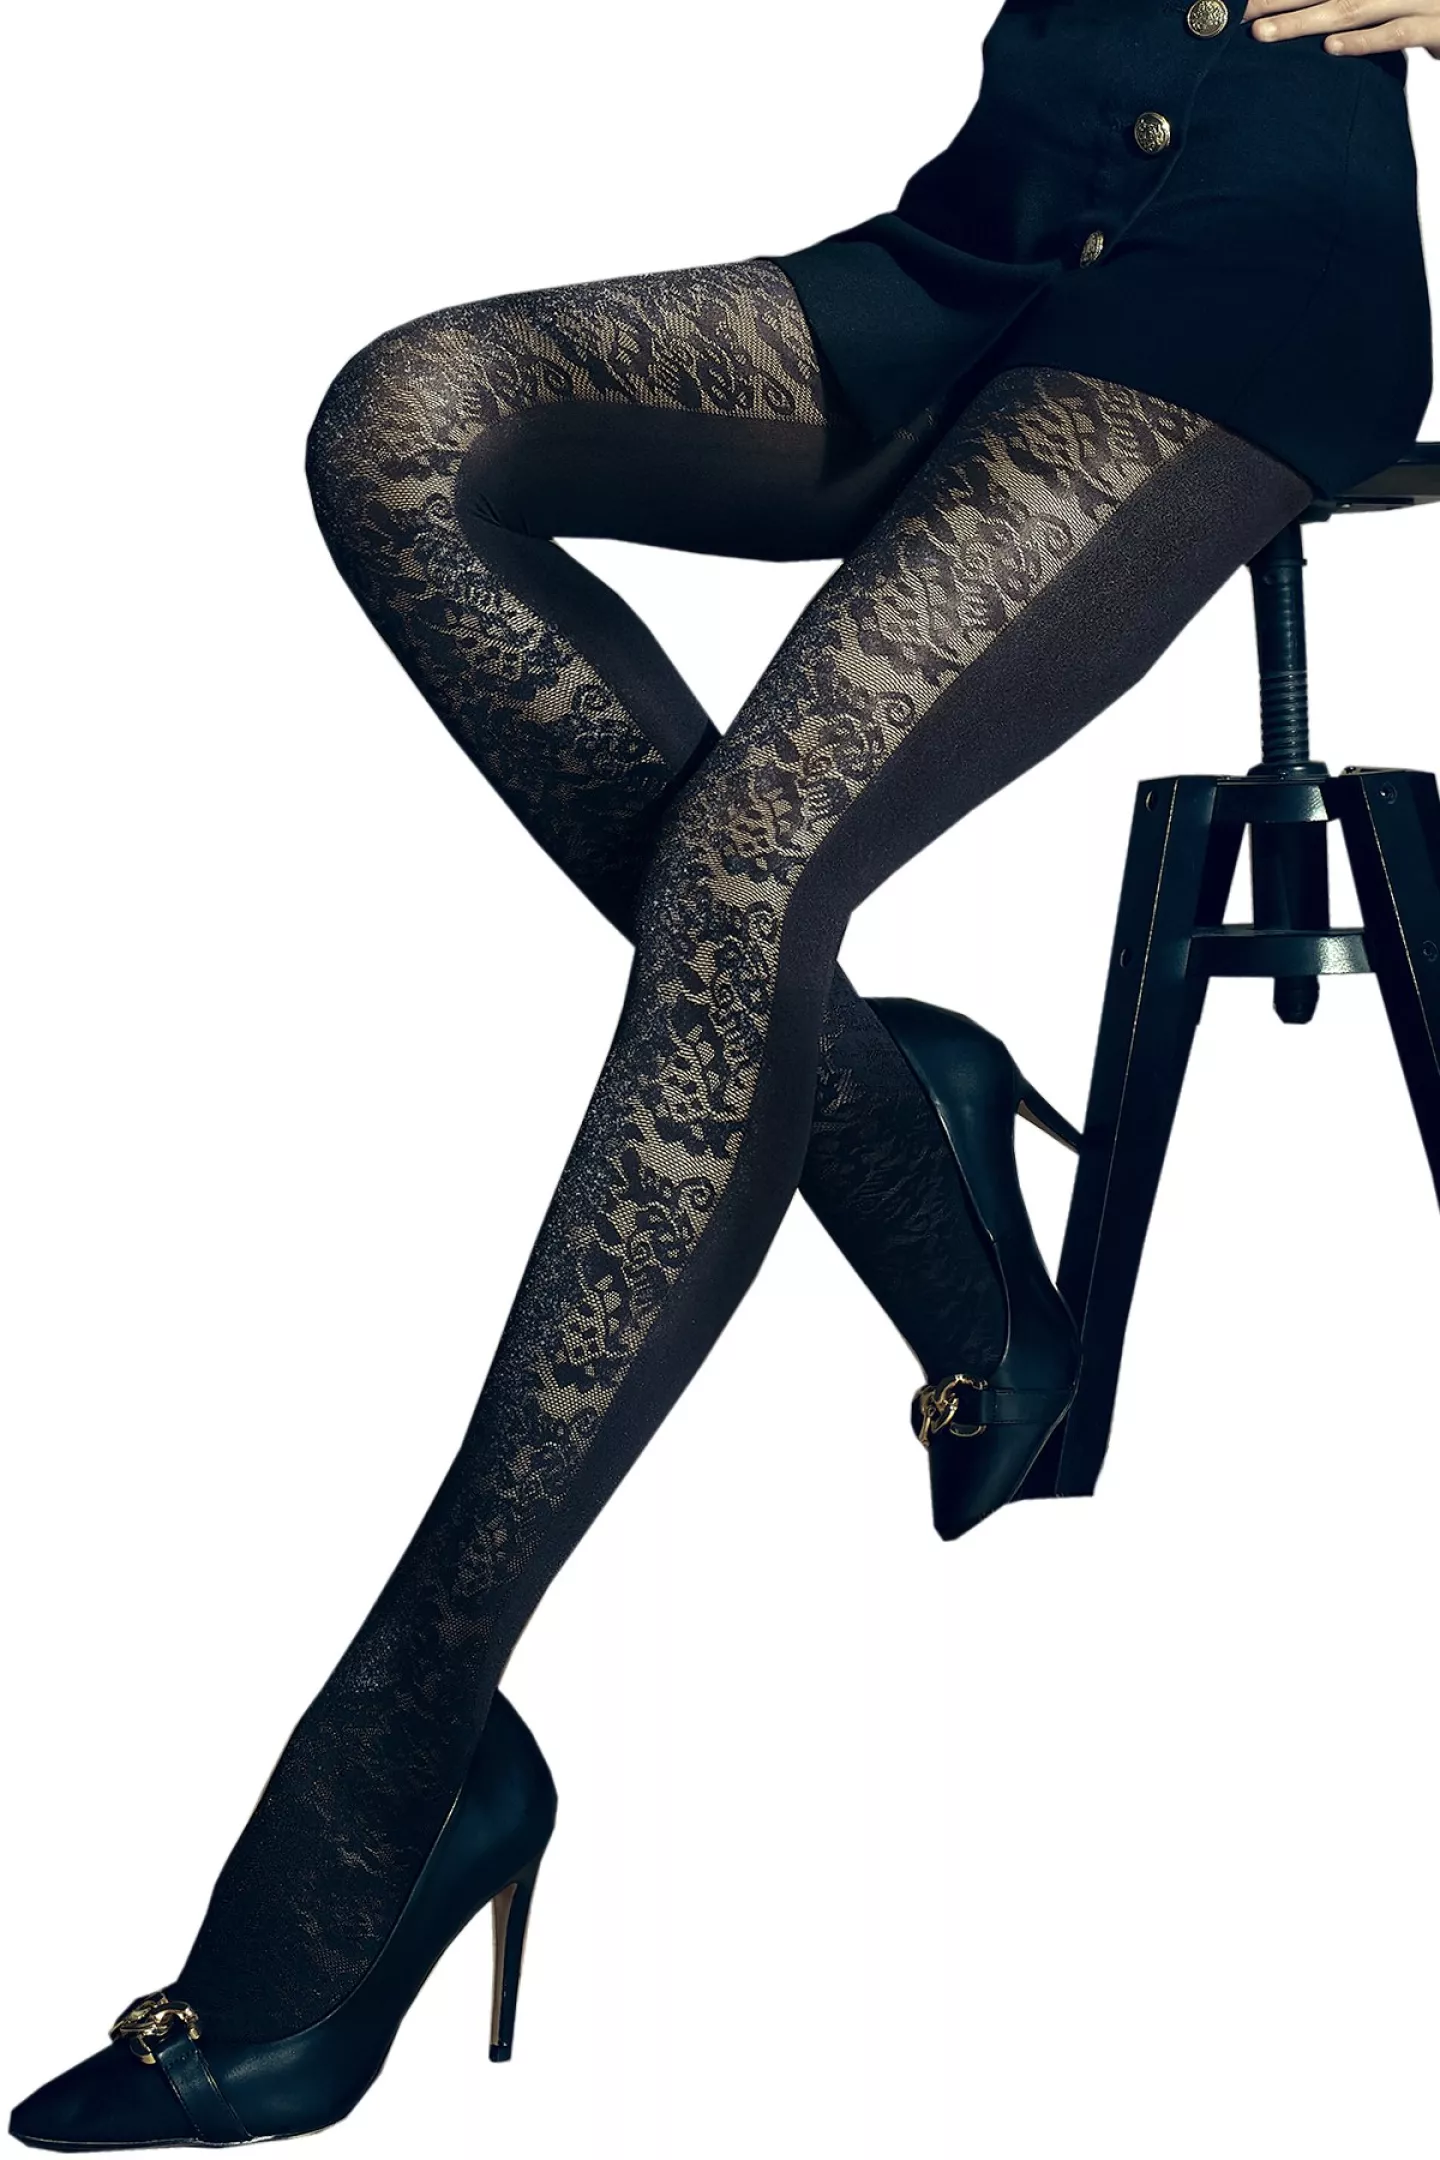 Knittex LUNEA Collant Femme sexy fantaisie 40 Den 3D Noir Taille 4